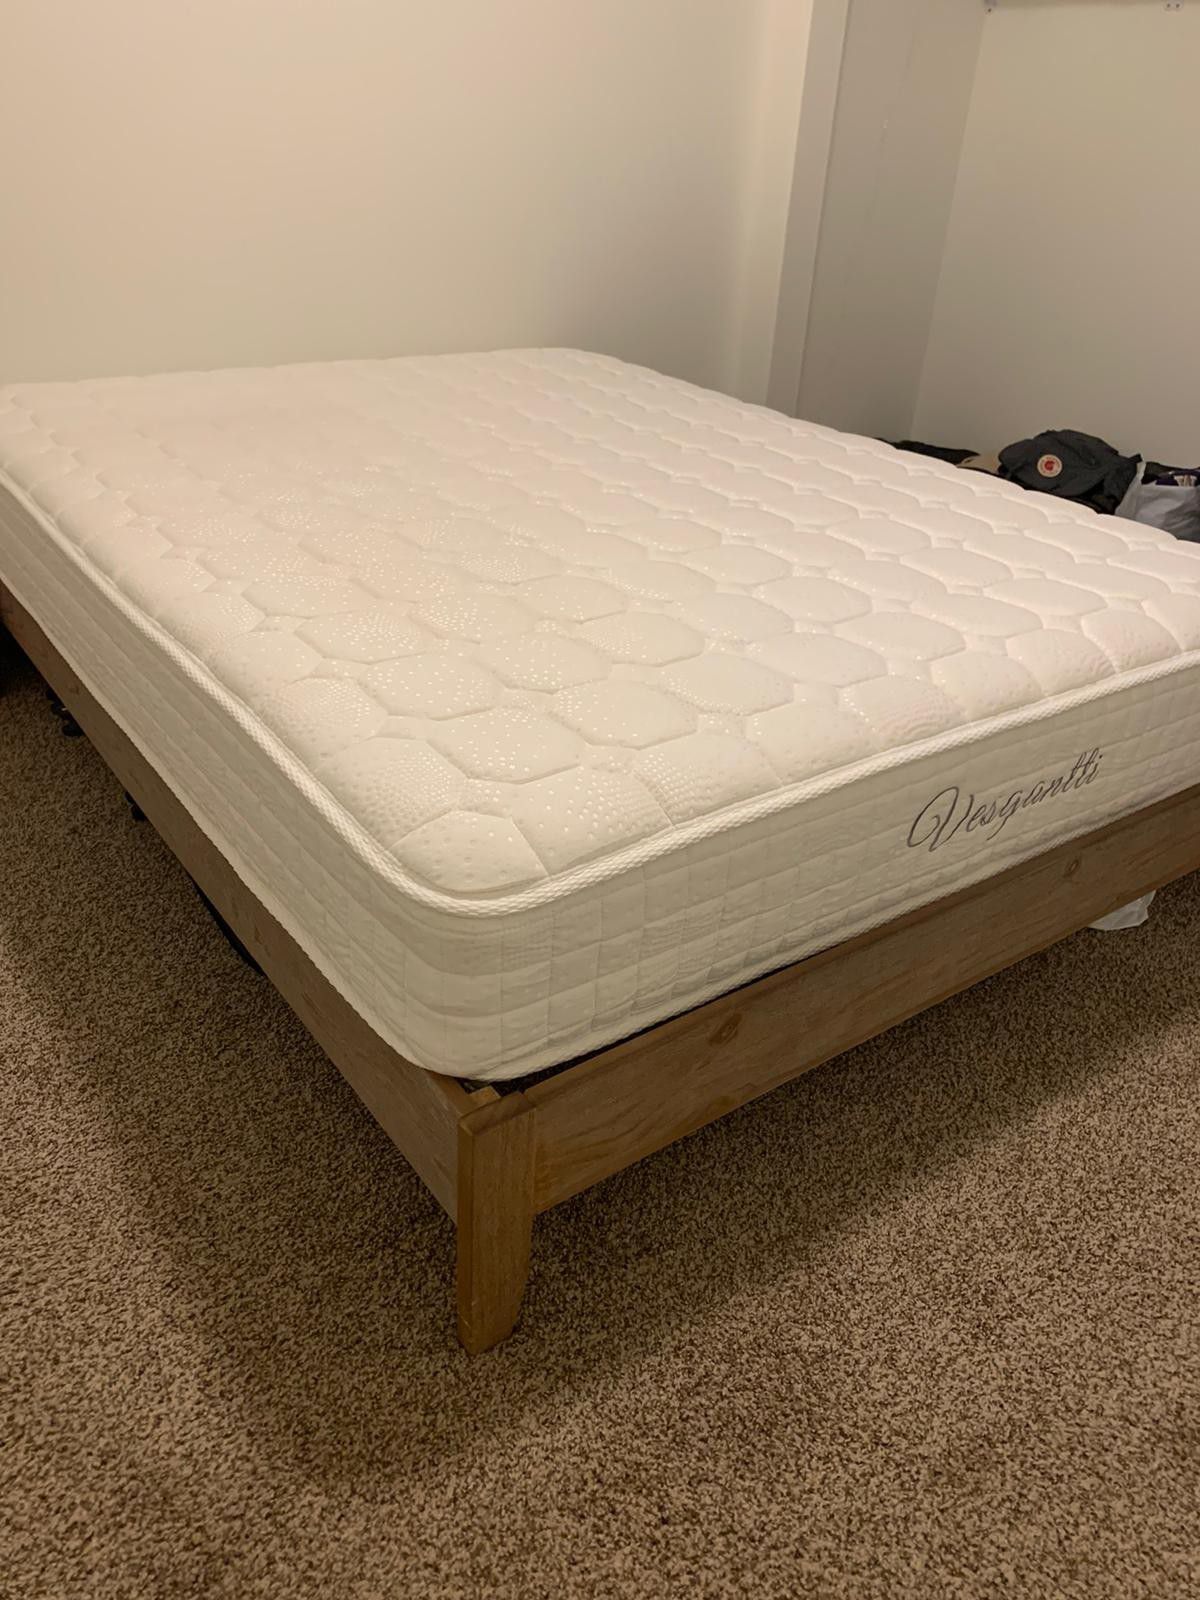 Queen bed frame and 9.4" mattress